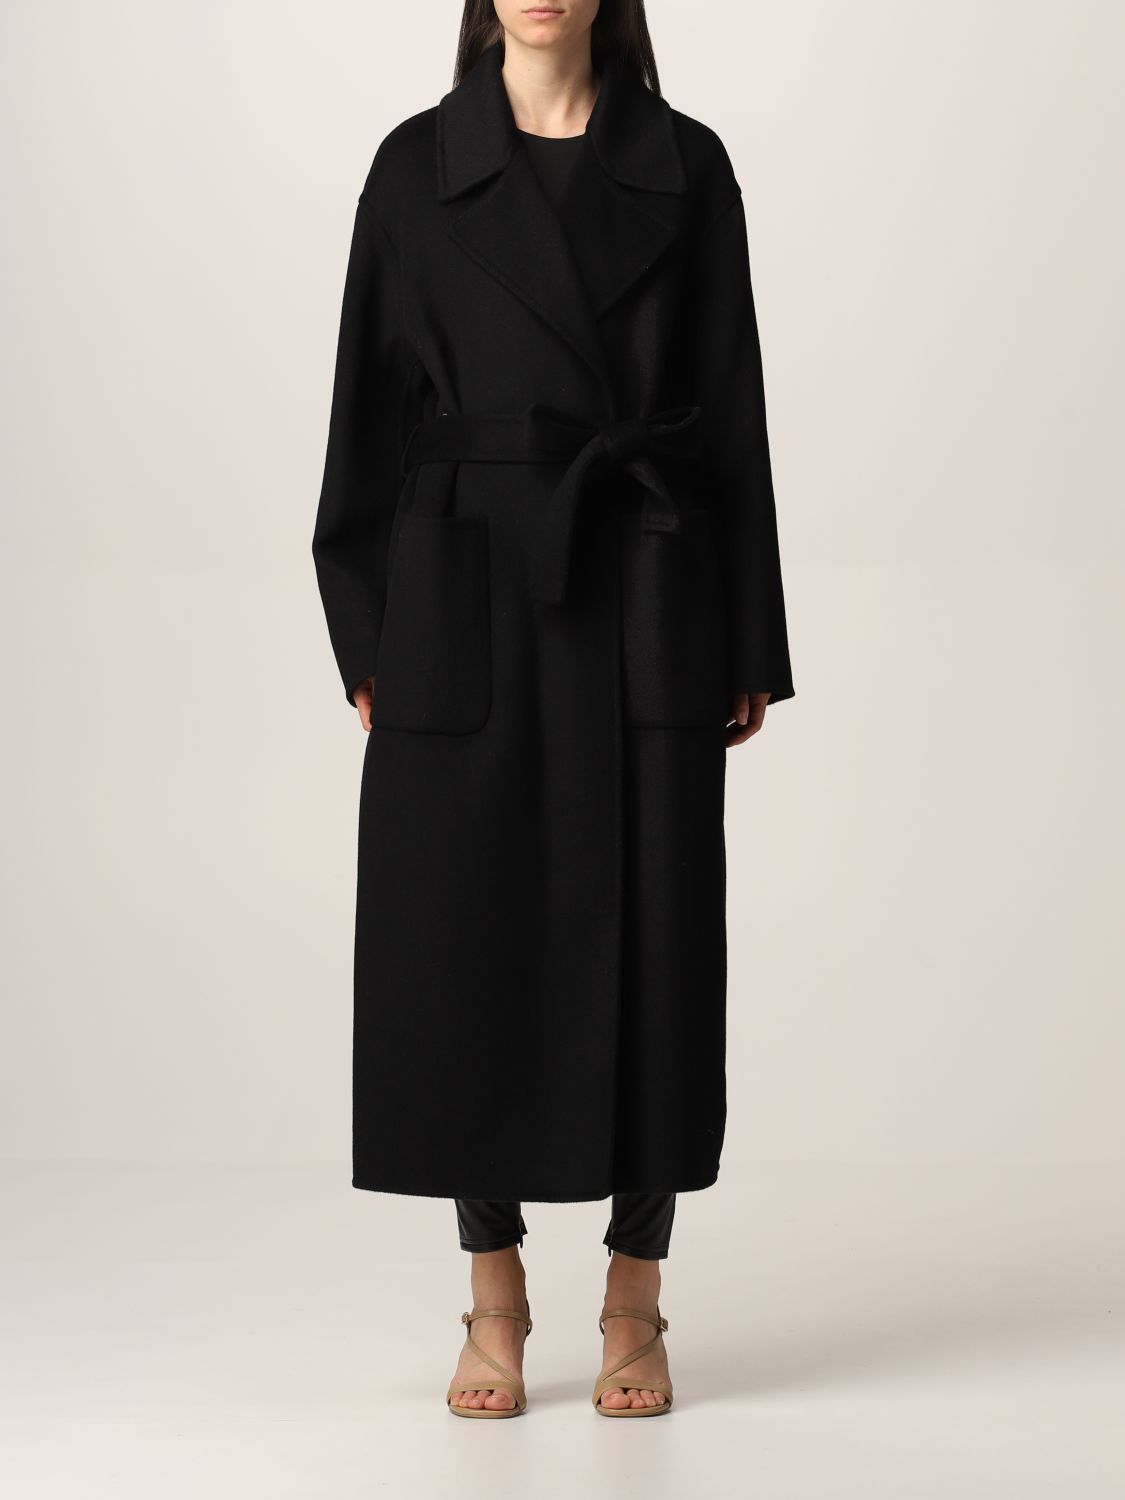 MICHAEL MICHAEL KORS: wrap coat | Coat Michael Michael Kors Women Black ...